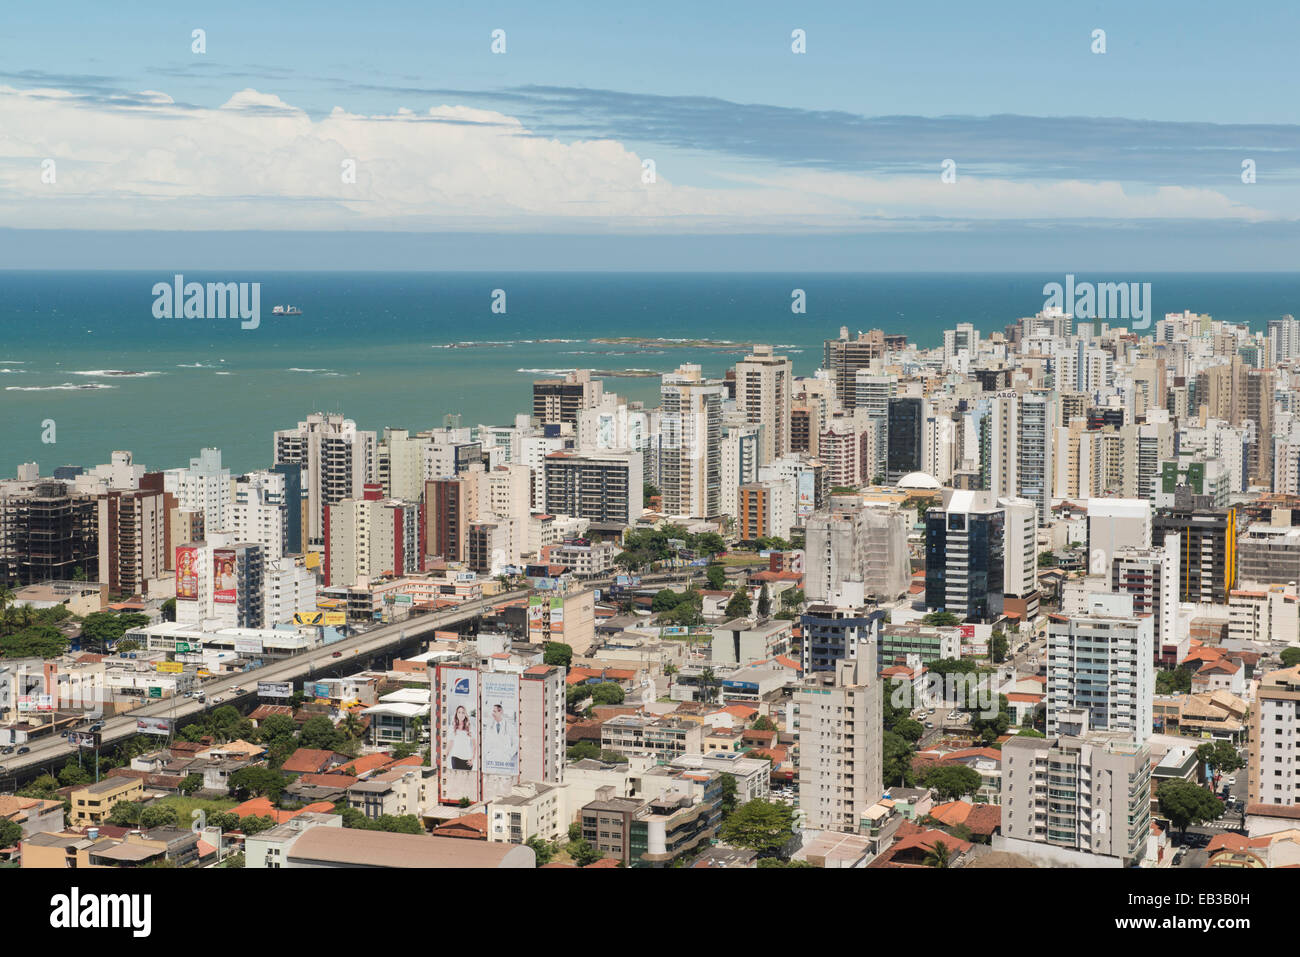 Aerial view of Vitoria cityscape and ocean, Santo, Brazil Stock Photo